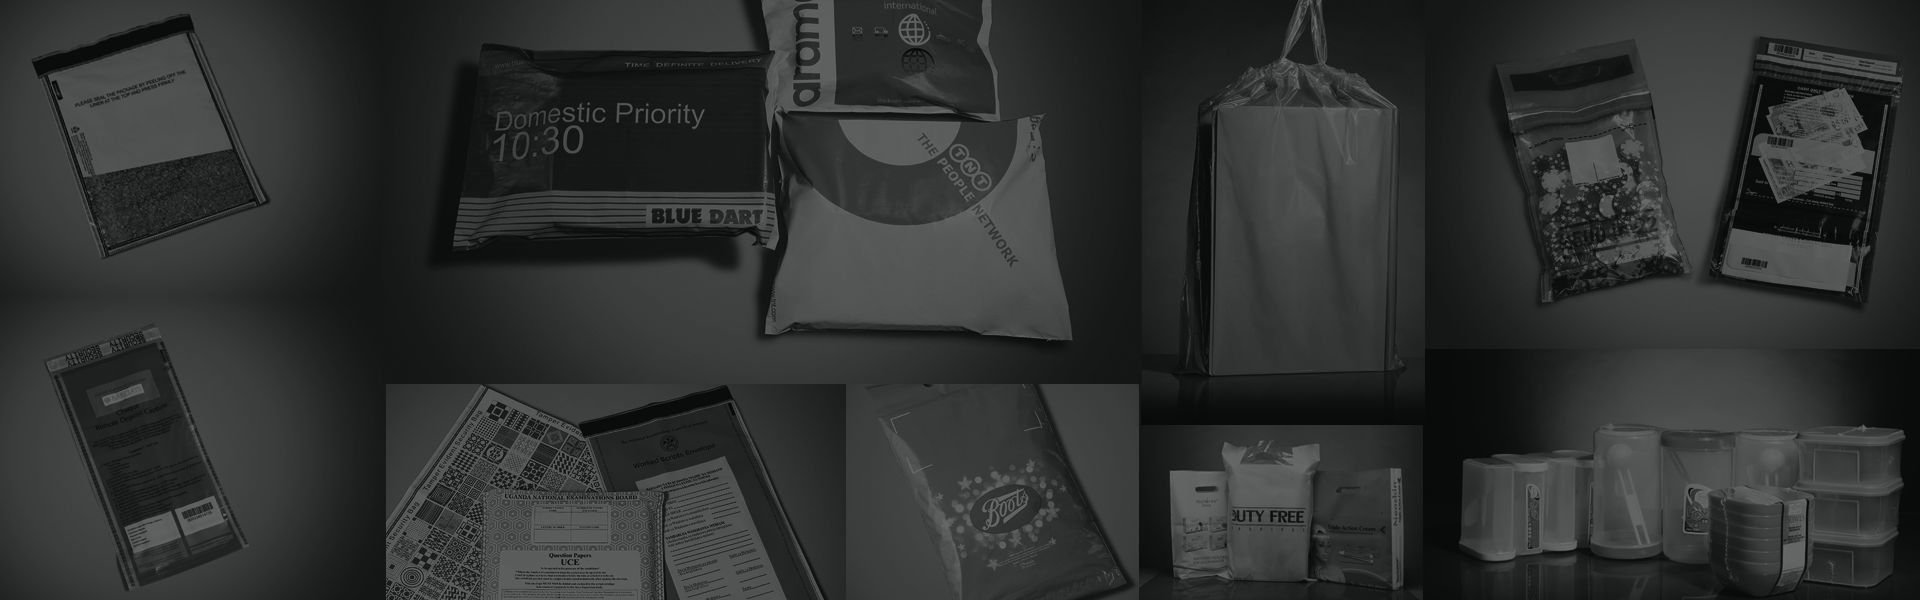 factory plastic duty free security bag| Alibaba.com